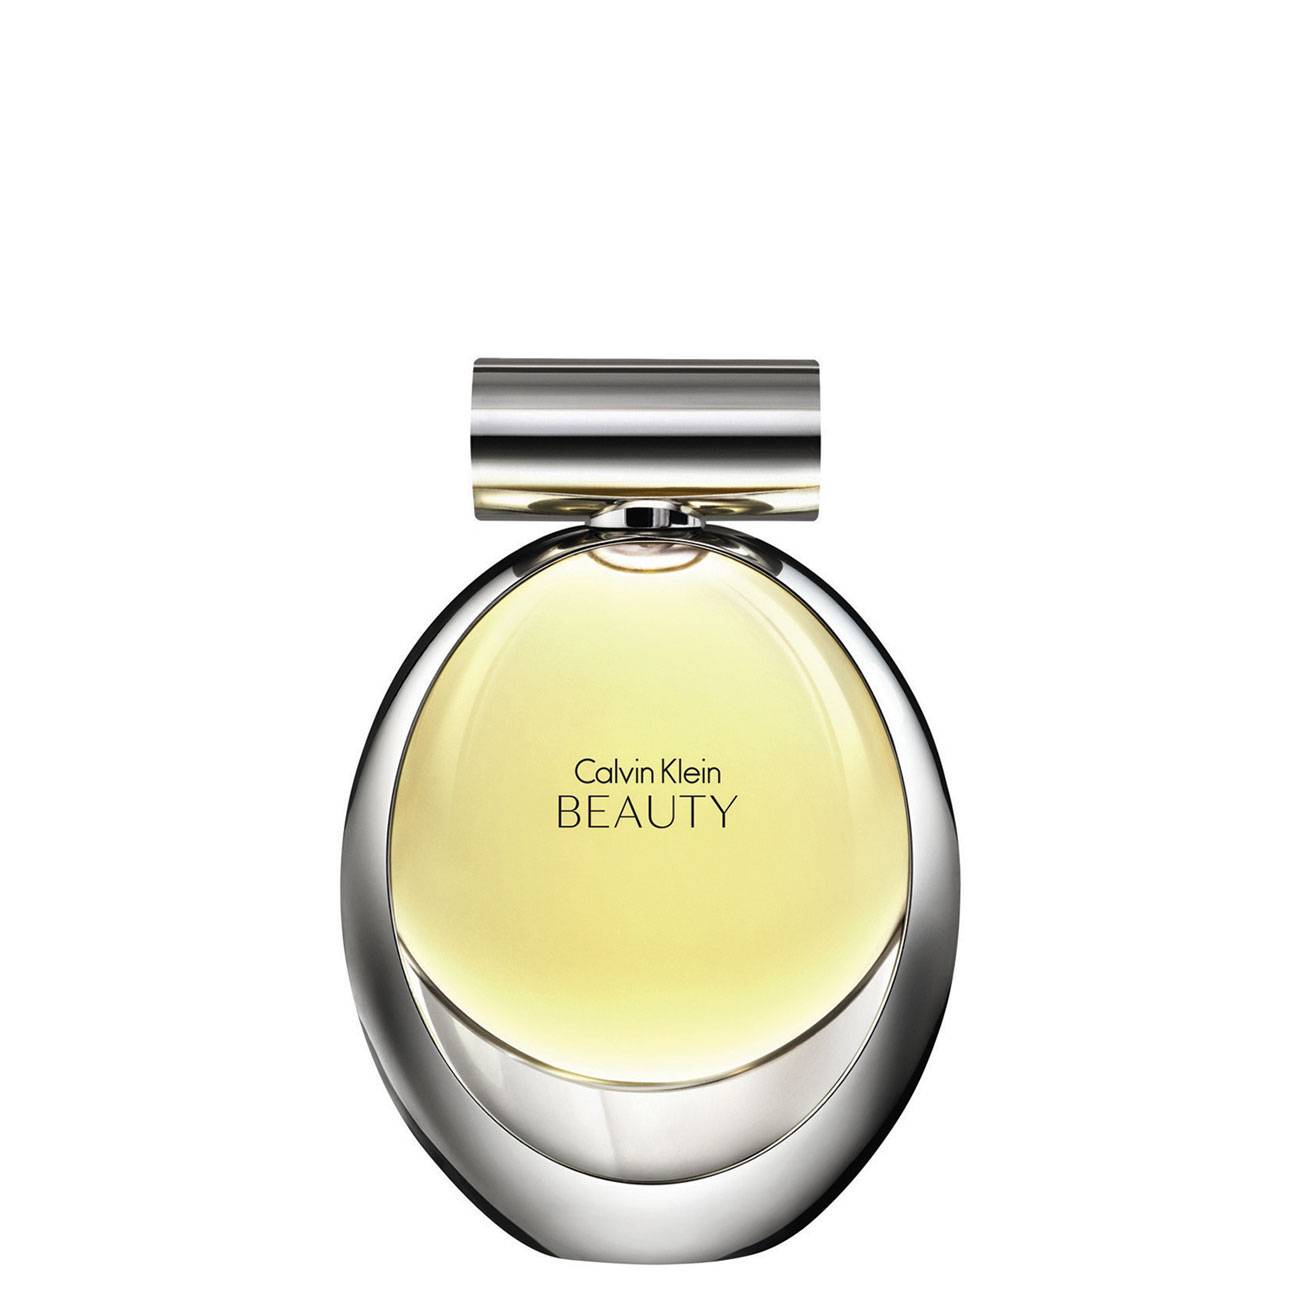 Apa de Parfum Calvin Klein BEAUTY 50ml cu comanda online